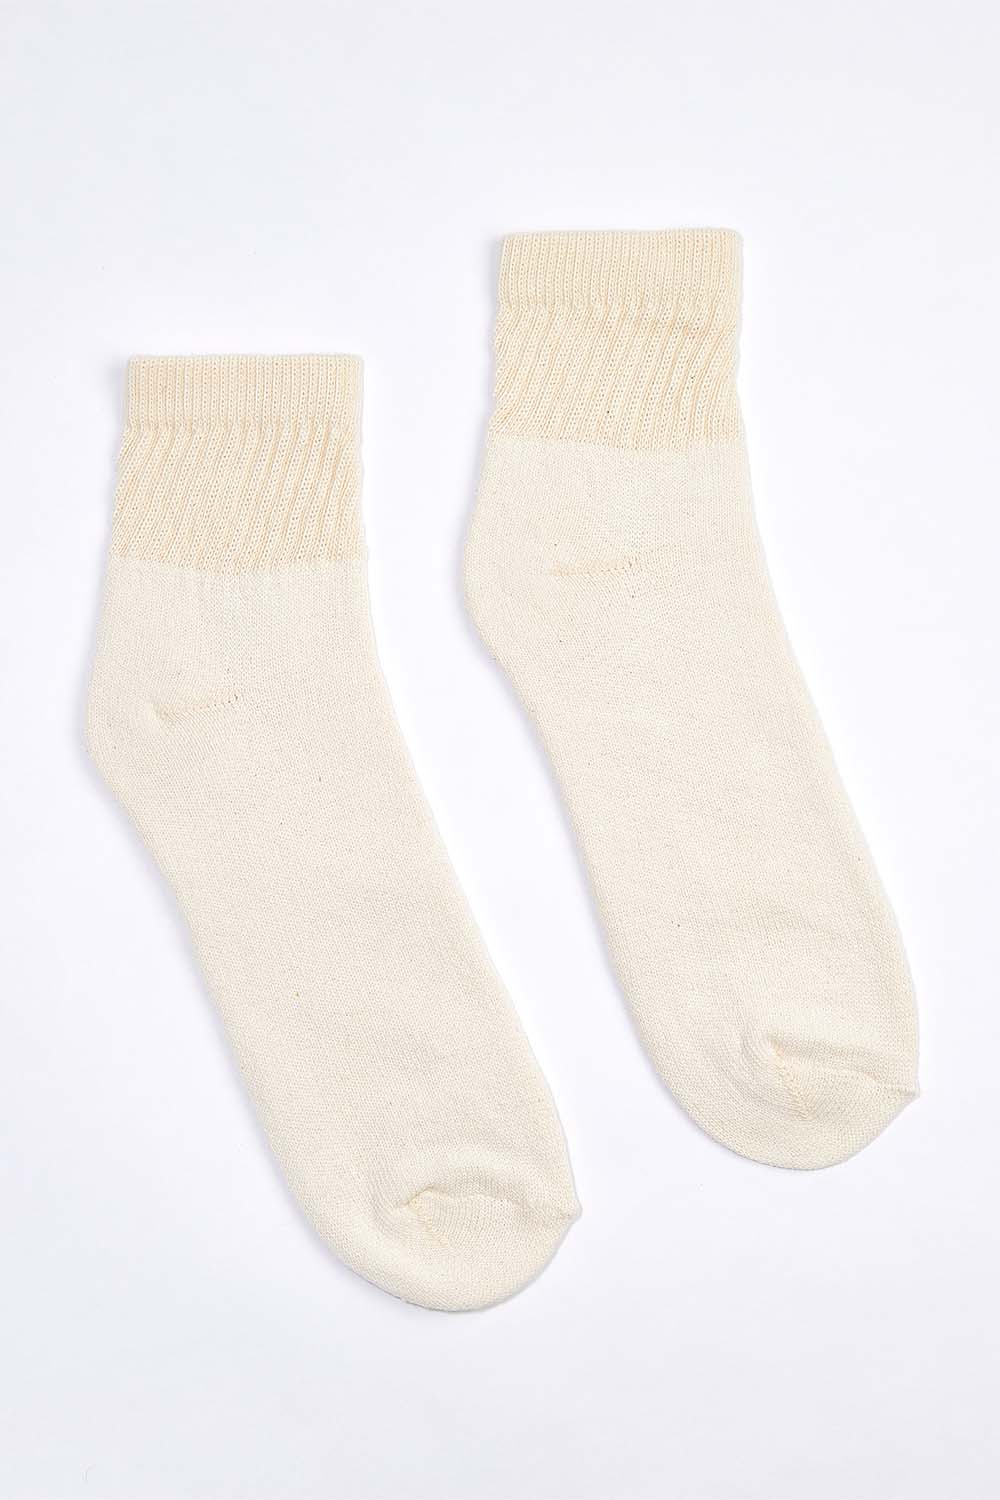 Women's Socks, Ankle & Wool Socks, White Stuff